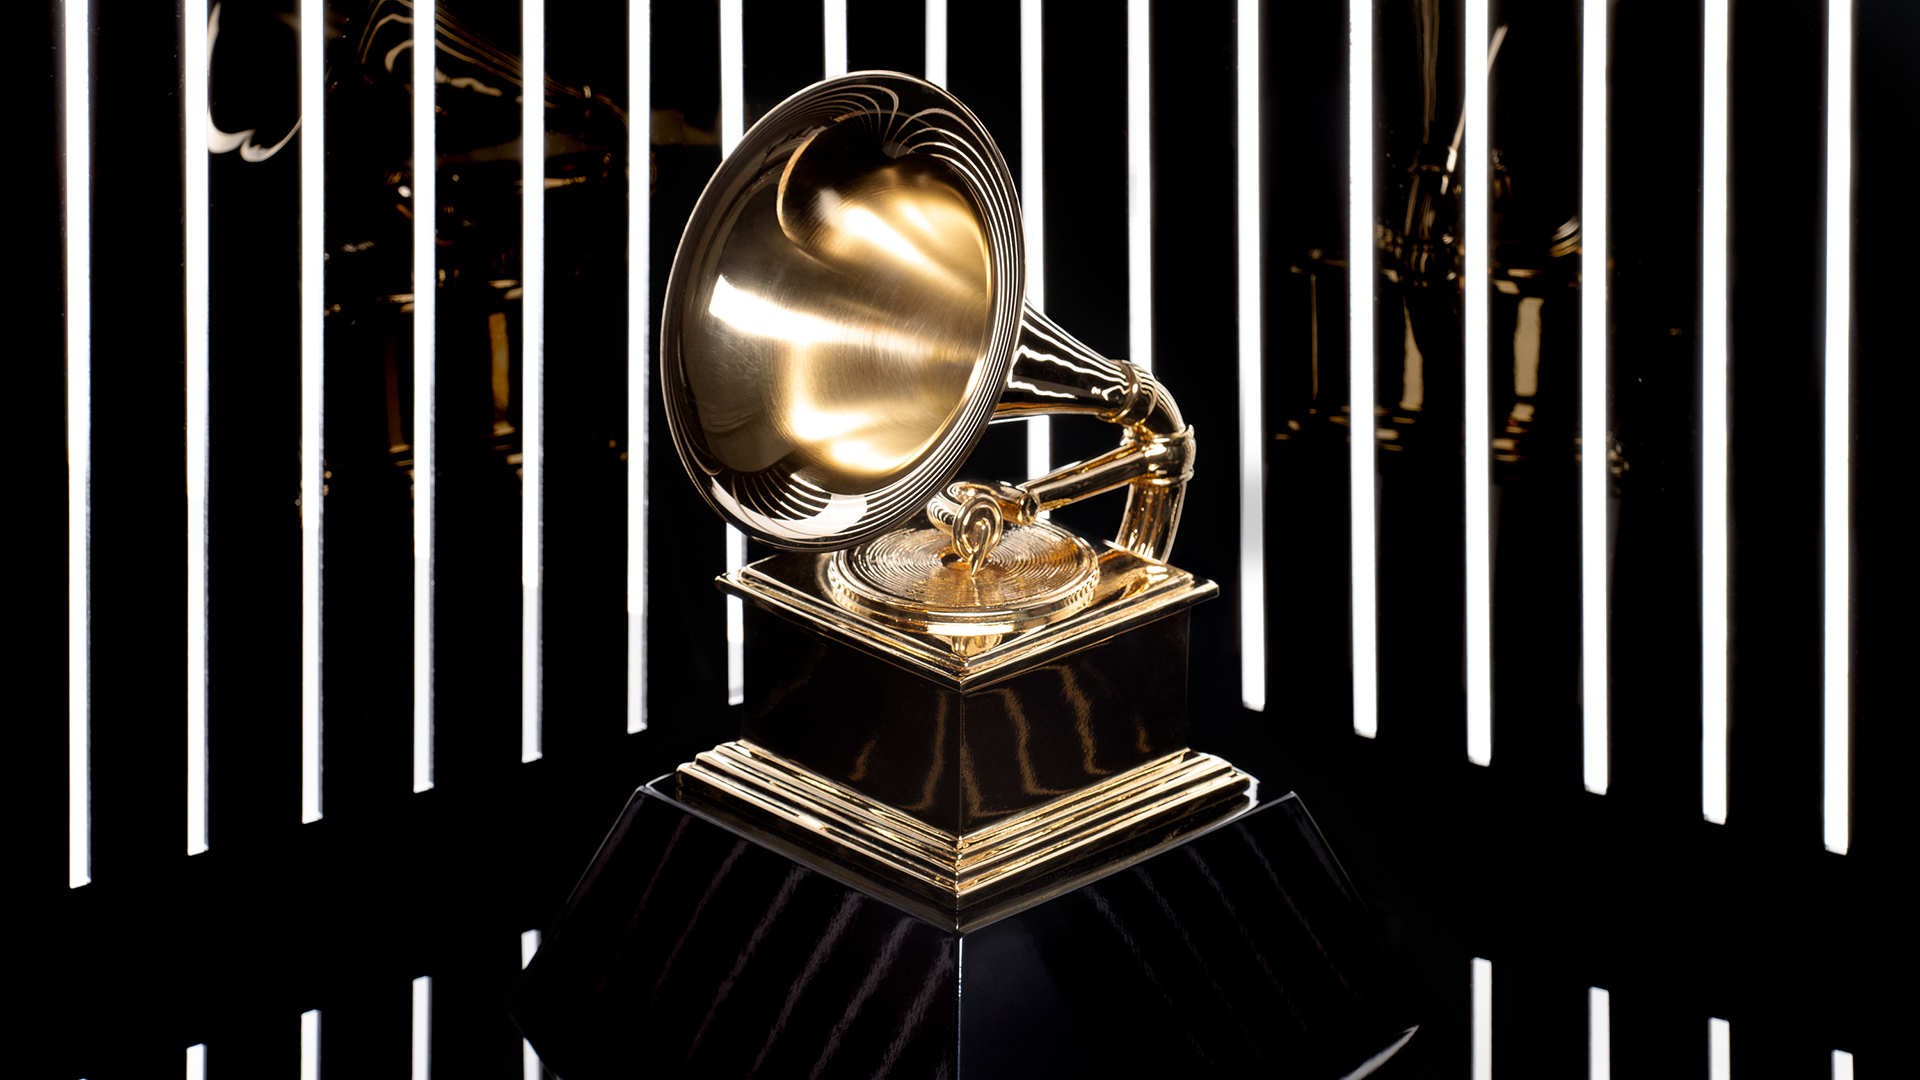 65th Annual Grammy Awards - Wikipedia